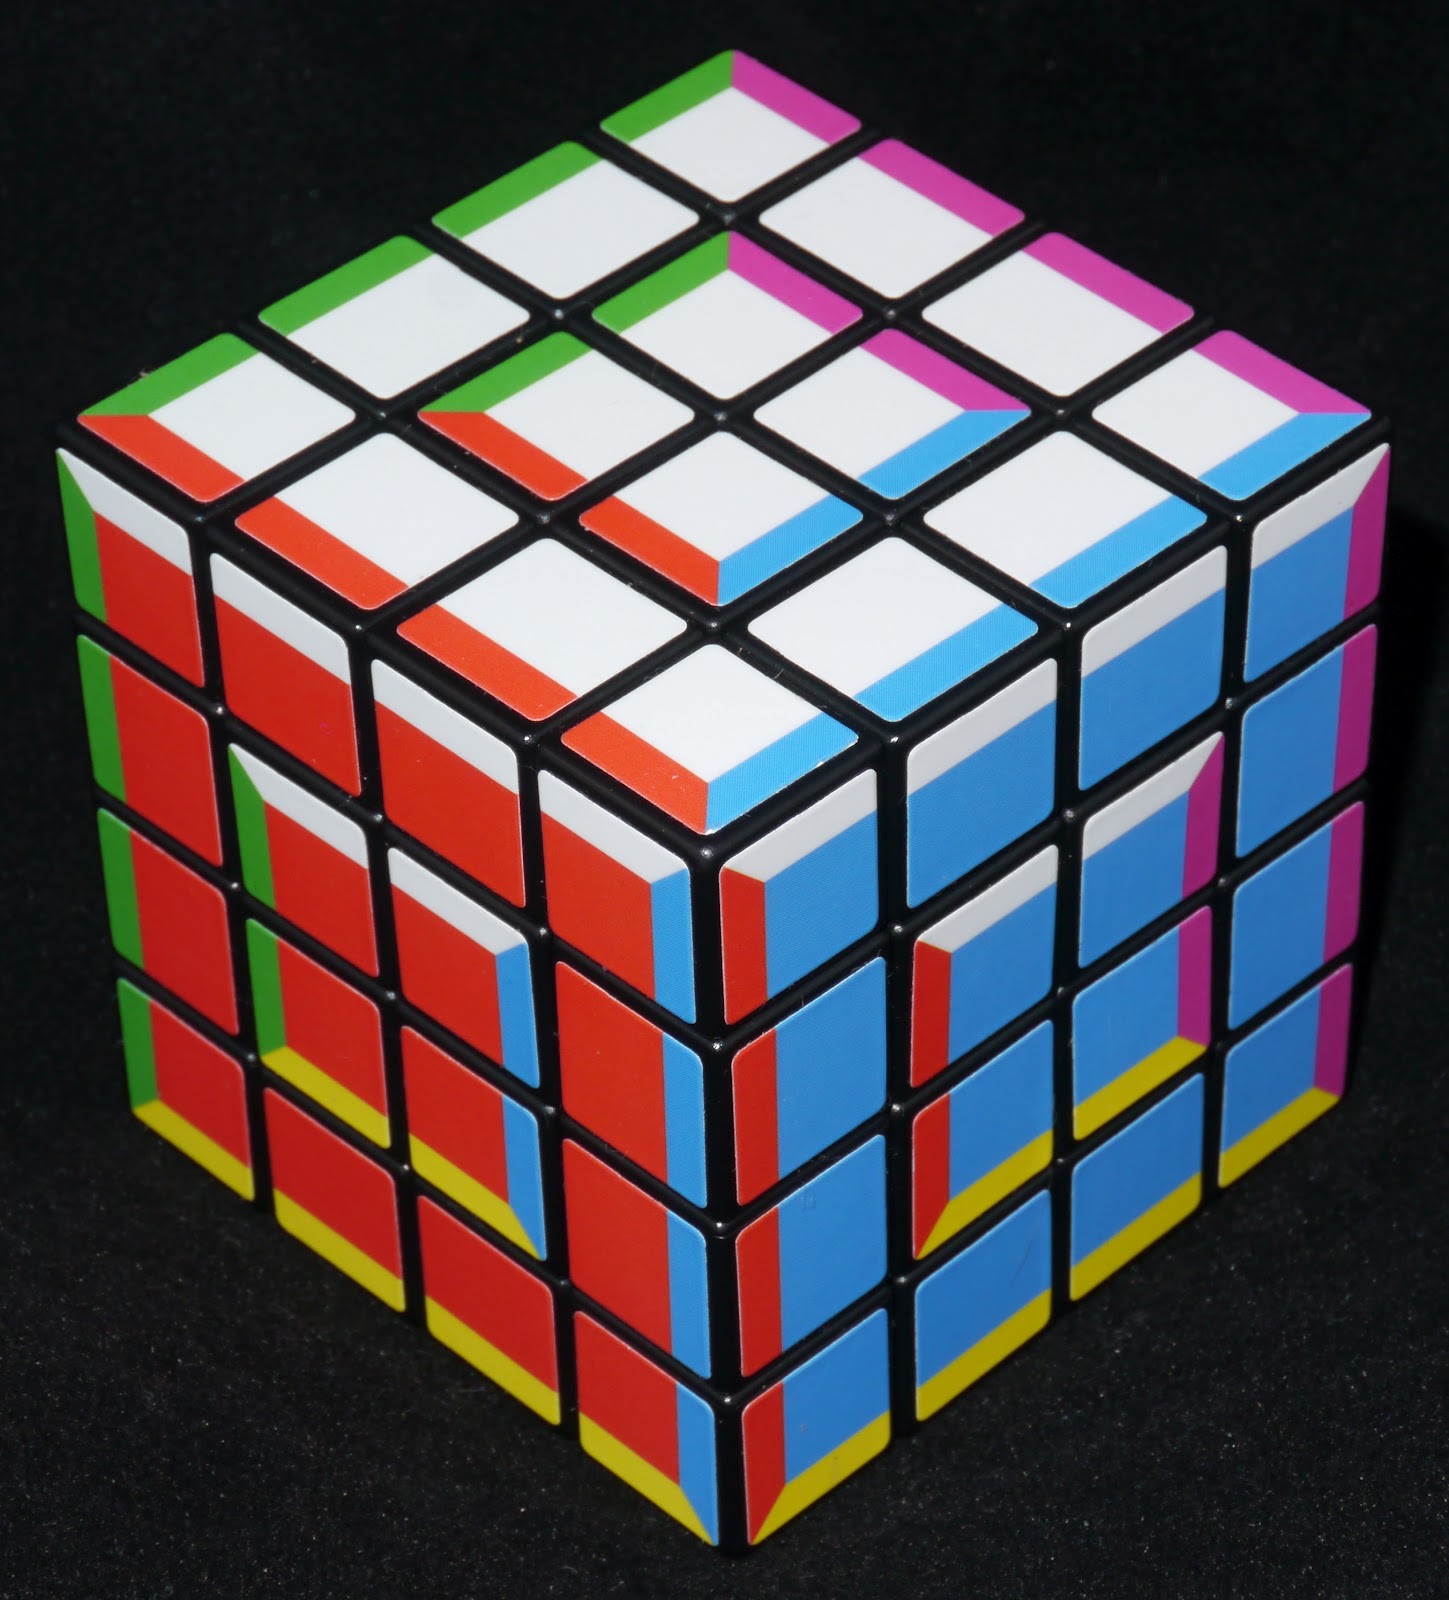 Unsolvable Rubik's Cube - Invalid scramble